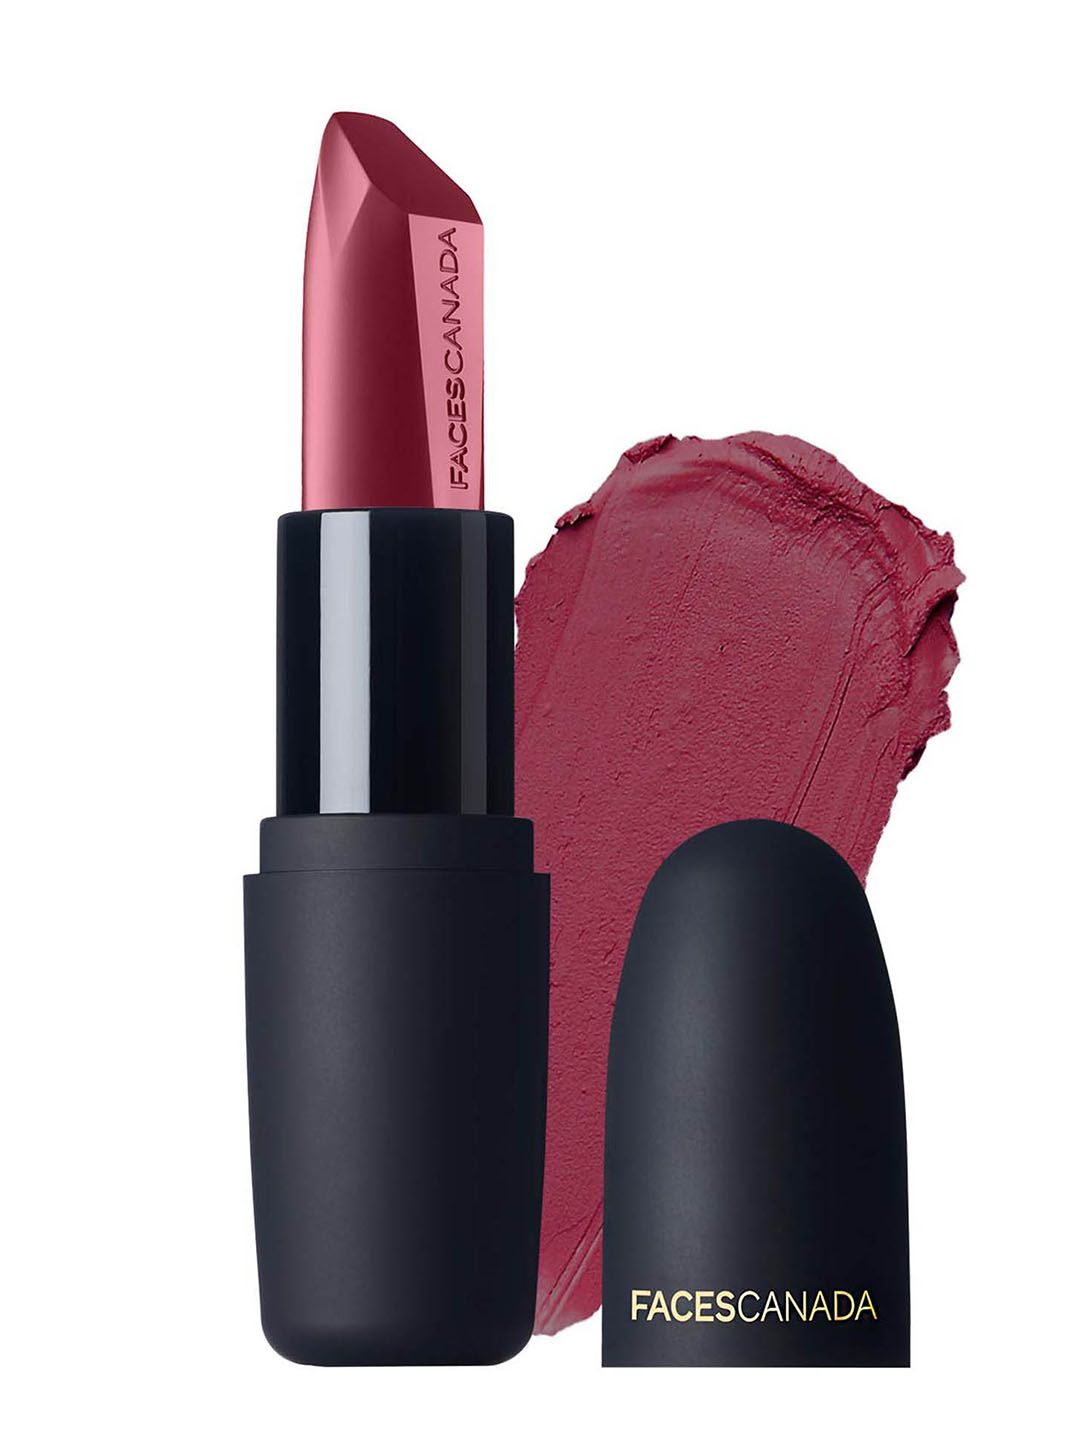 FACES CANADA Weightless Matte Finish Lipstick Flamboyant Plum 12 4gm Price in India